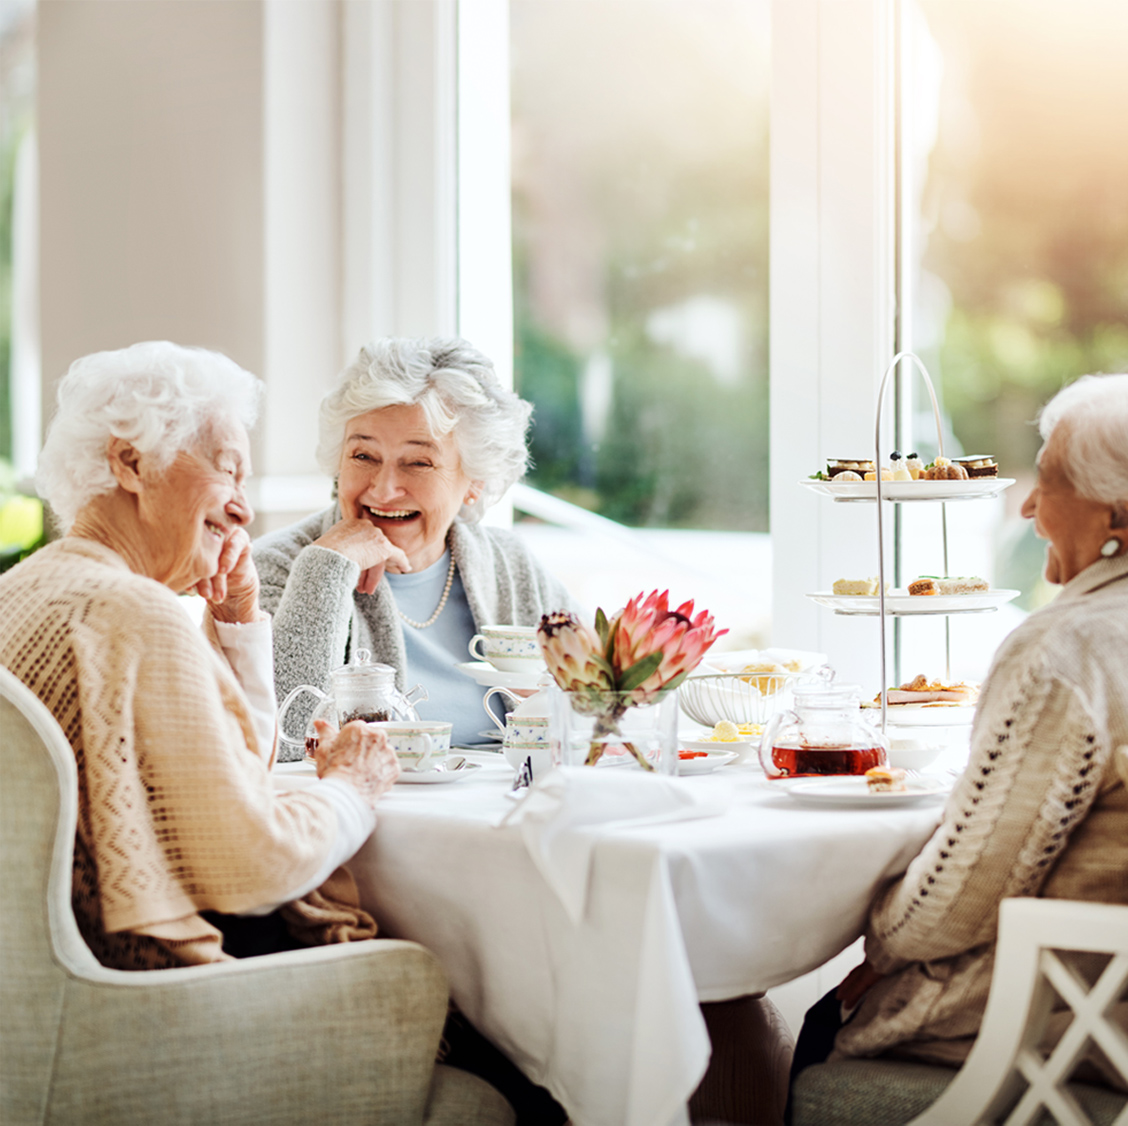 Spring Living Retirement Communities Across Ontario - Retirement Homes, Independent Living